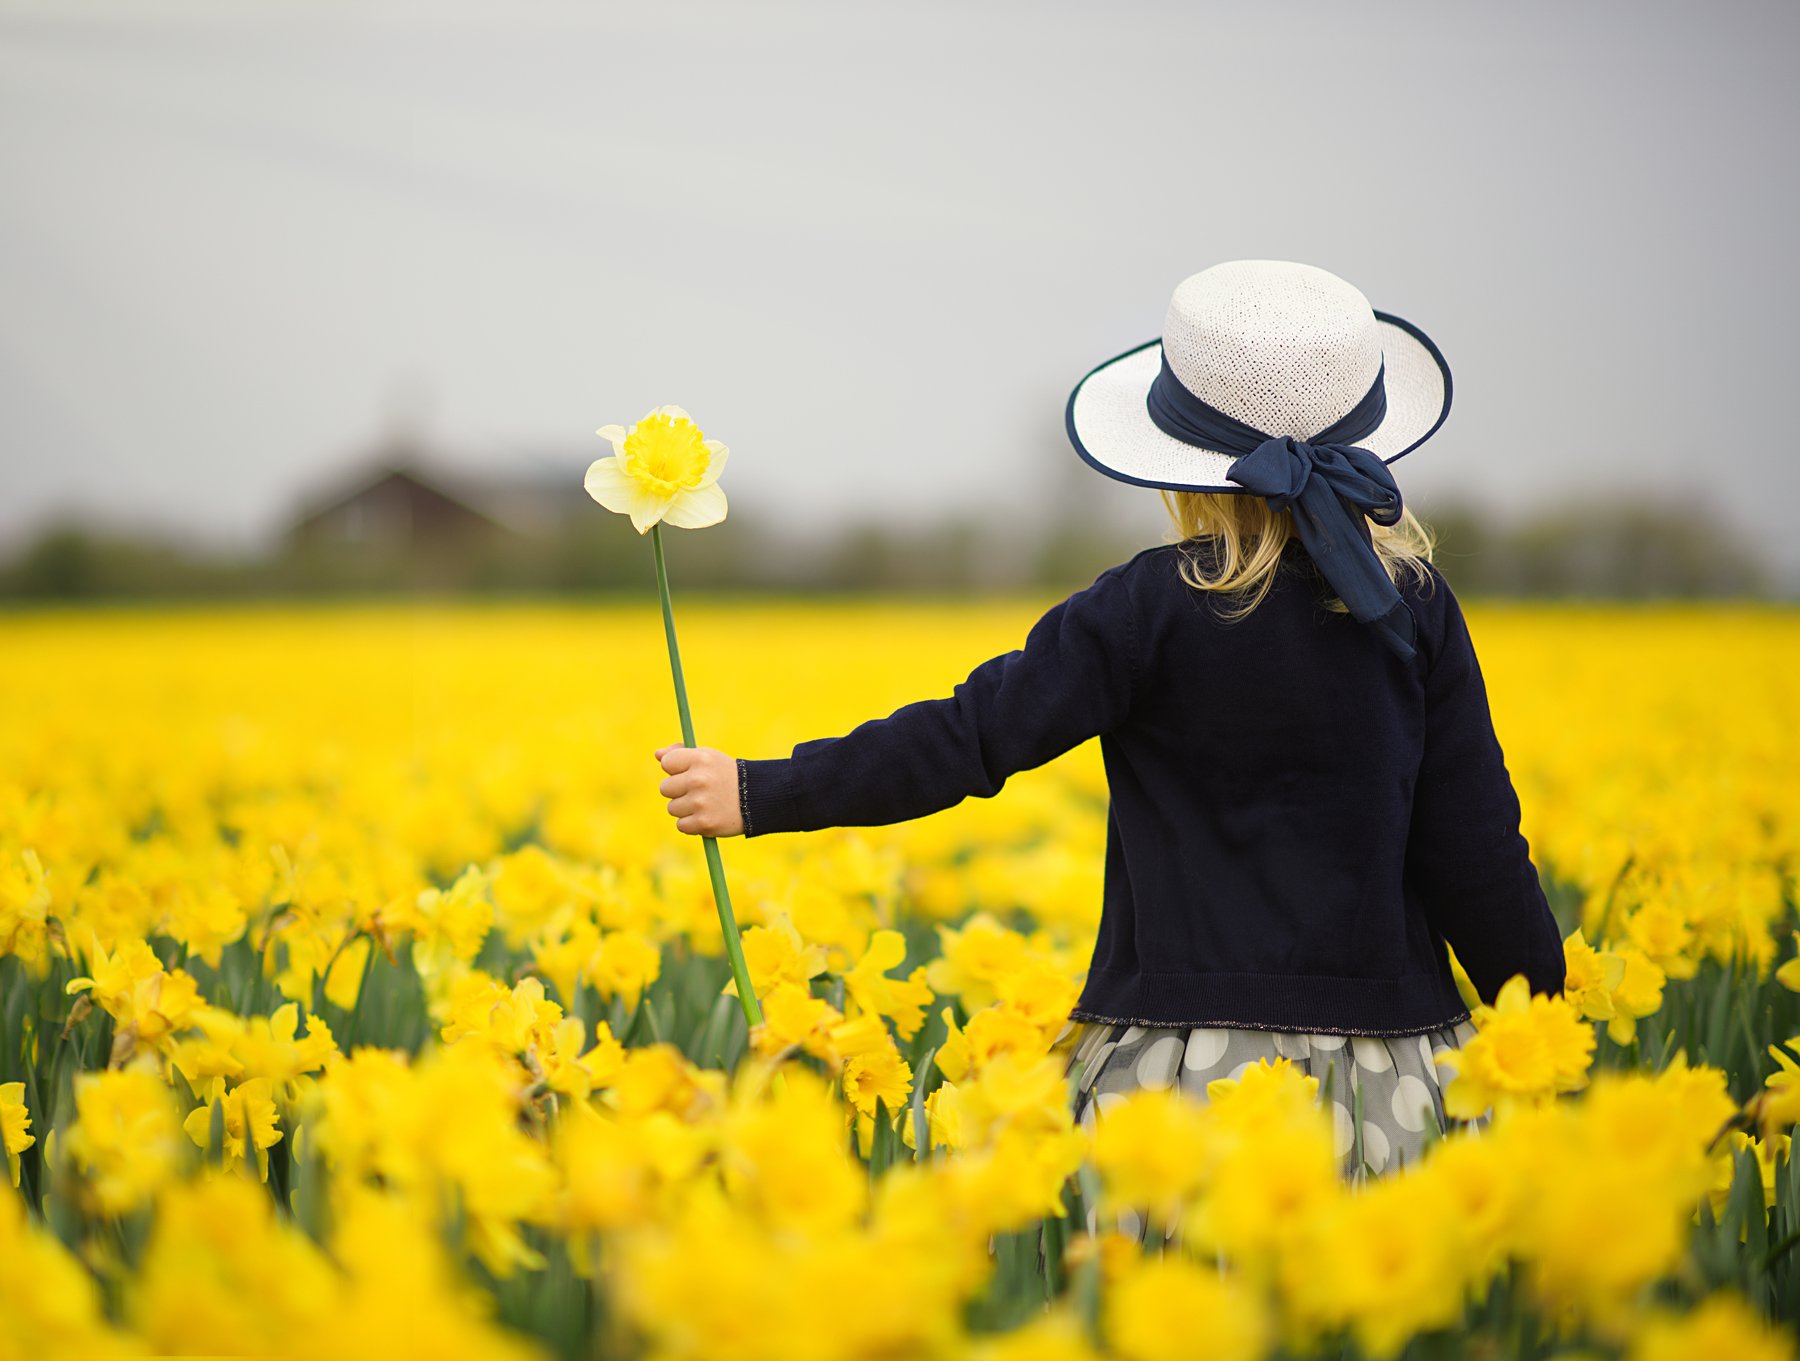 spring нарциссы голландия поле цветов весна frühling holland blumen, Elena Hildbrand